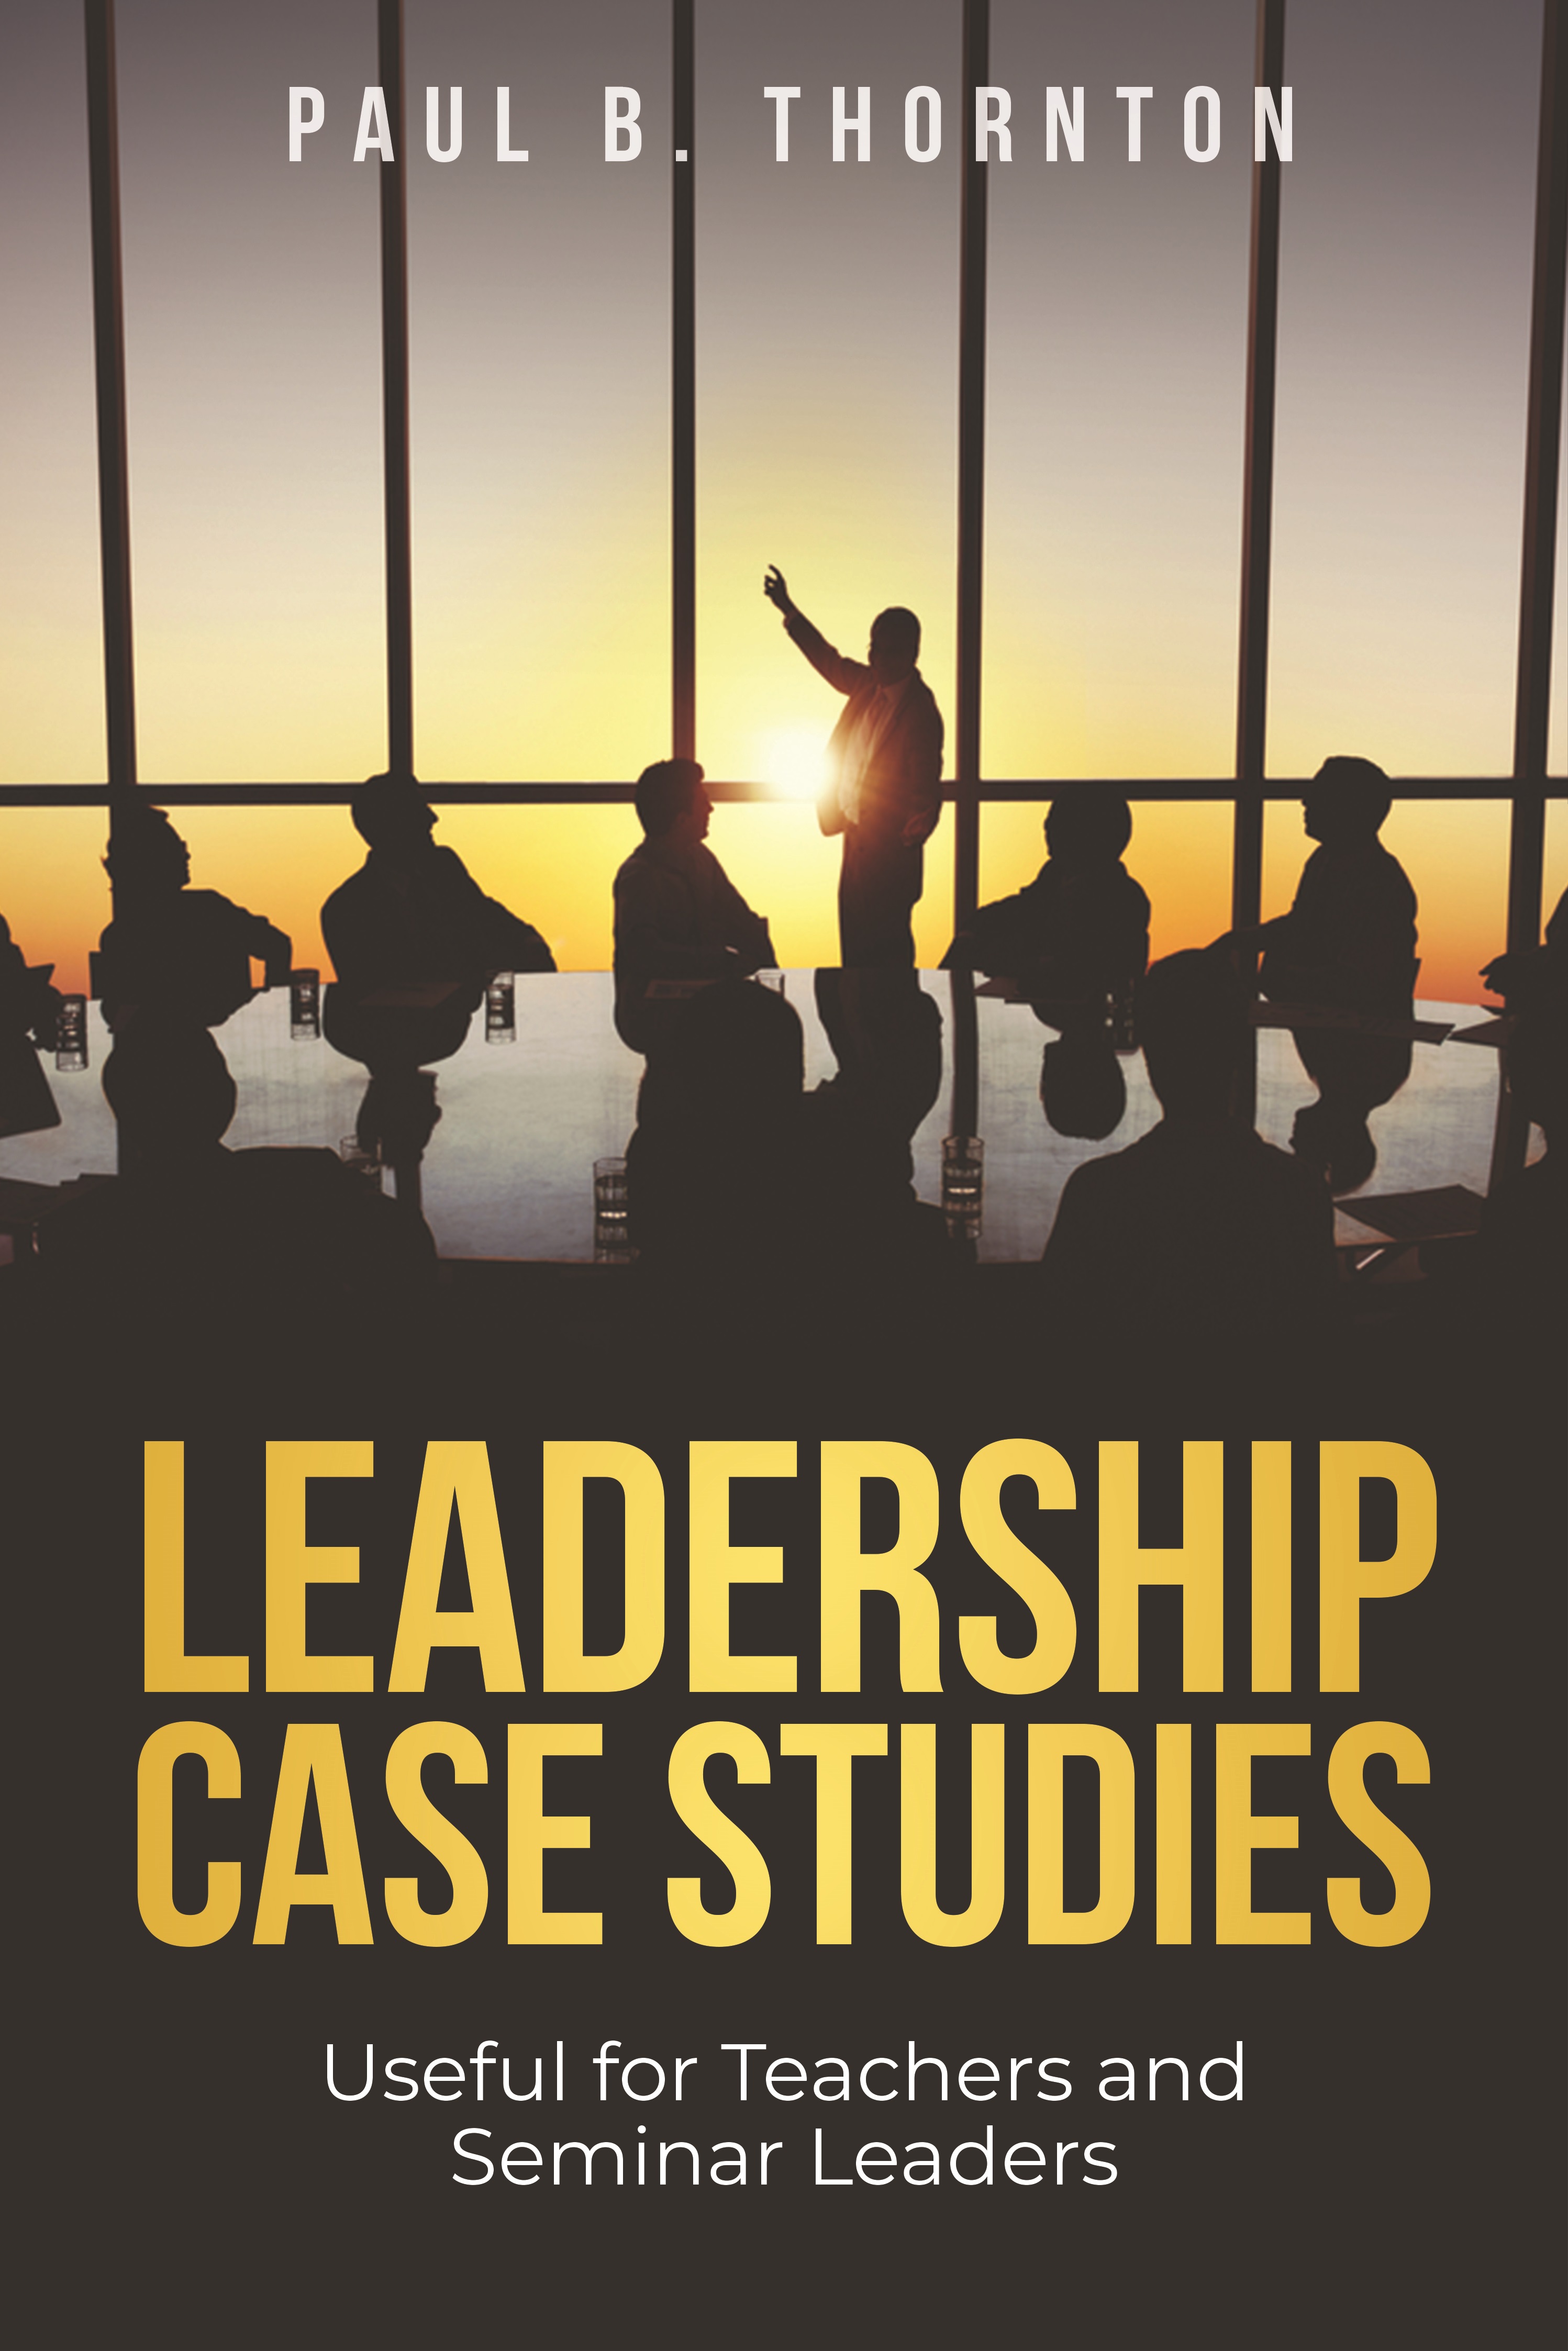 bad leadership case study